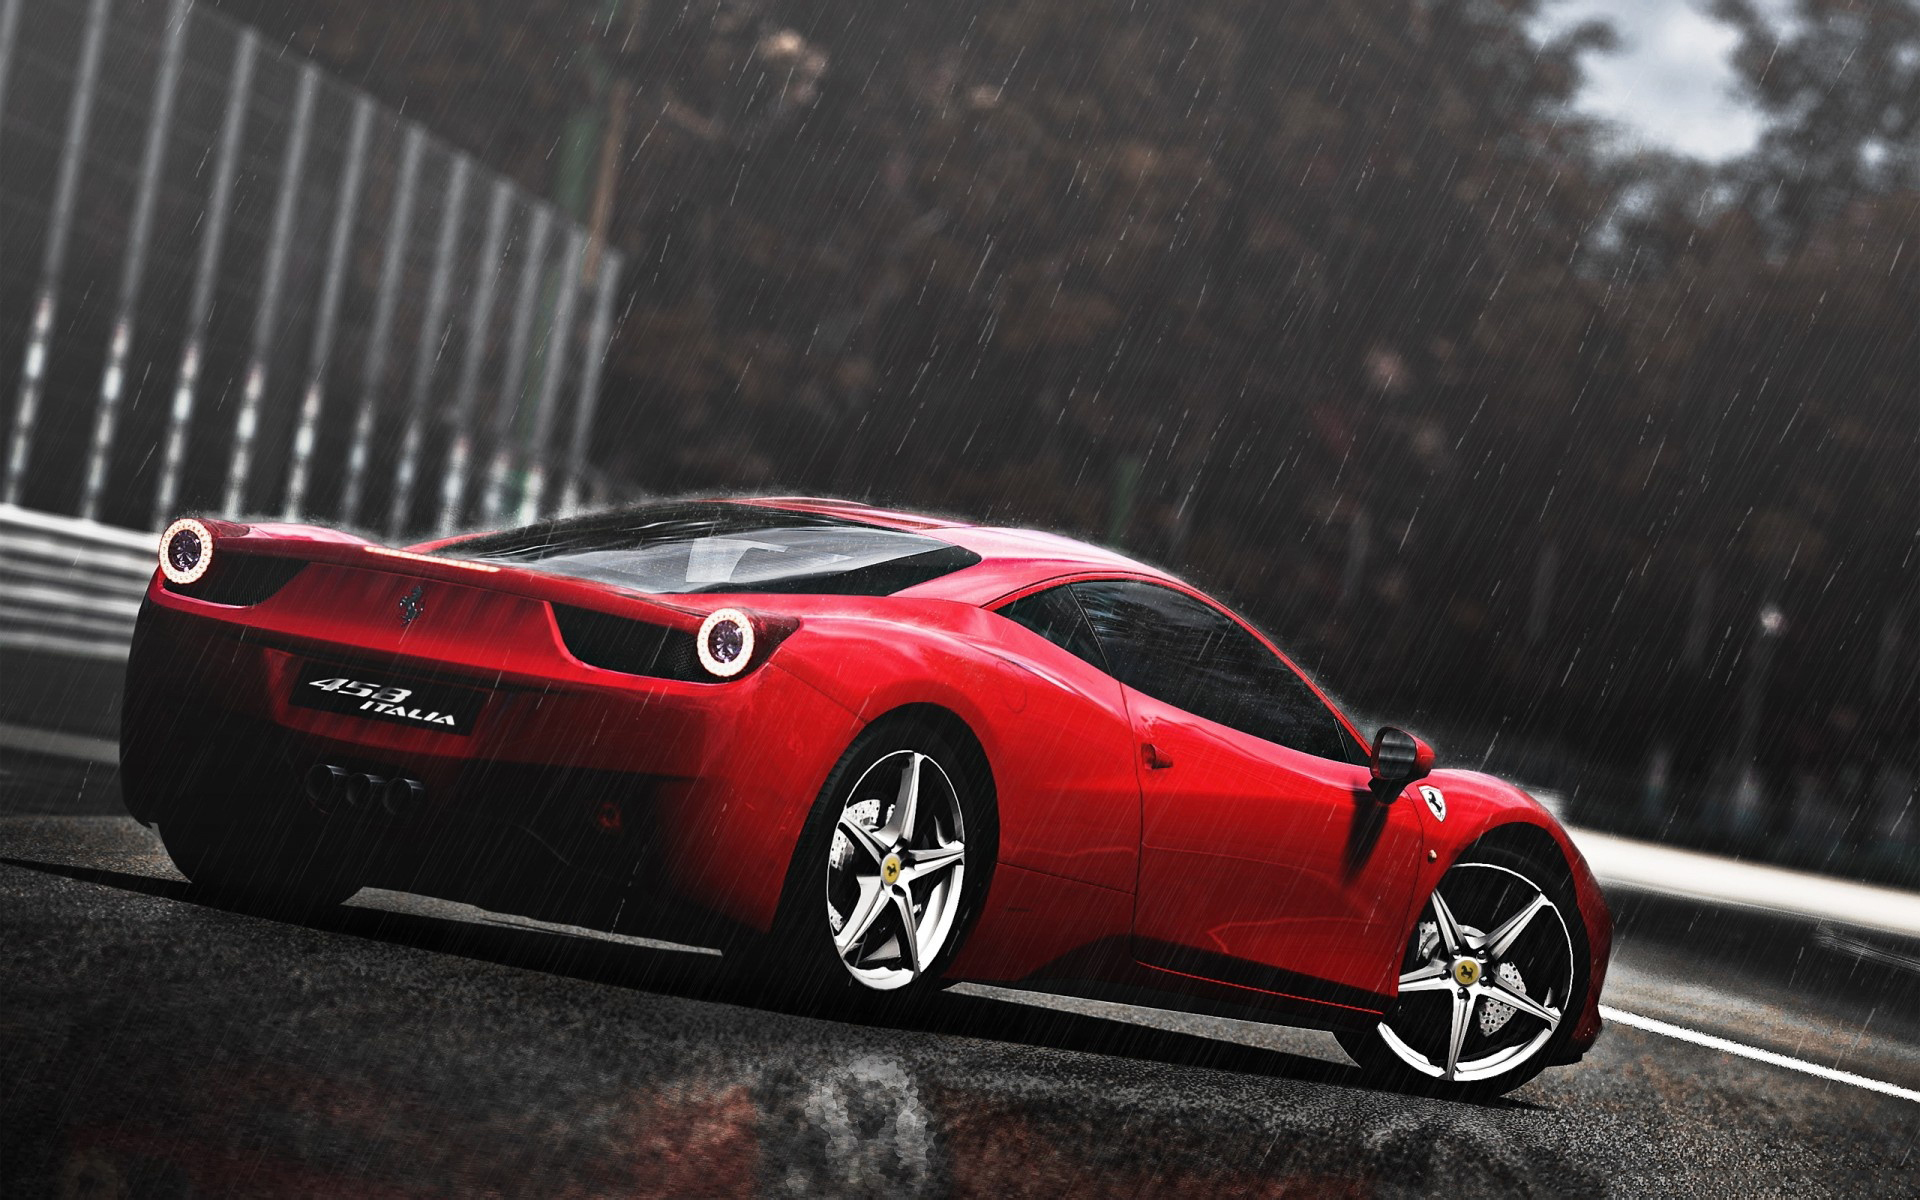 Red Ferrari Rainy Background Gallery Yopriceville   High 1920x1200